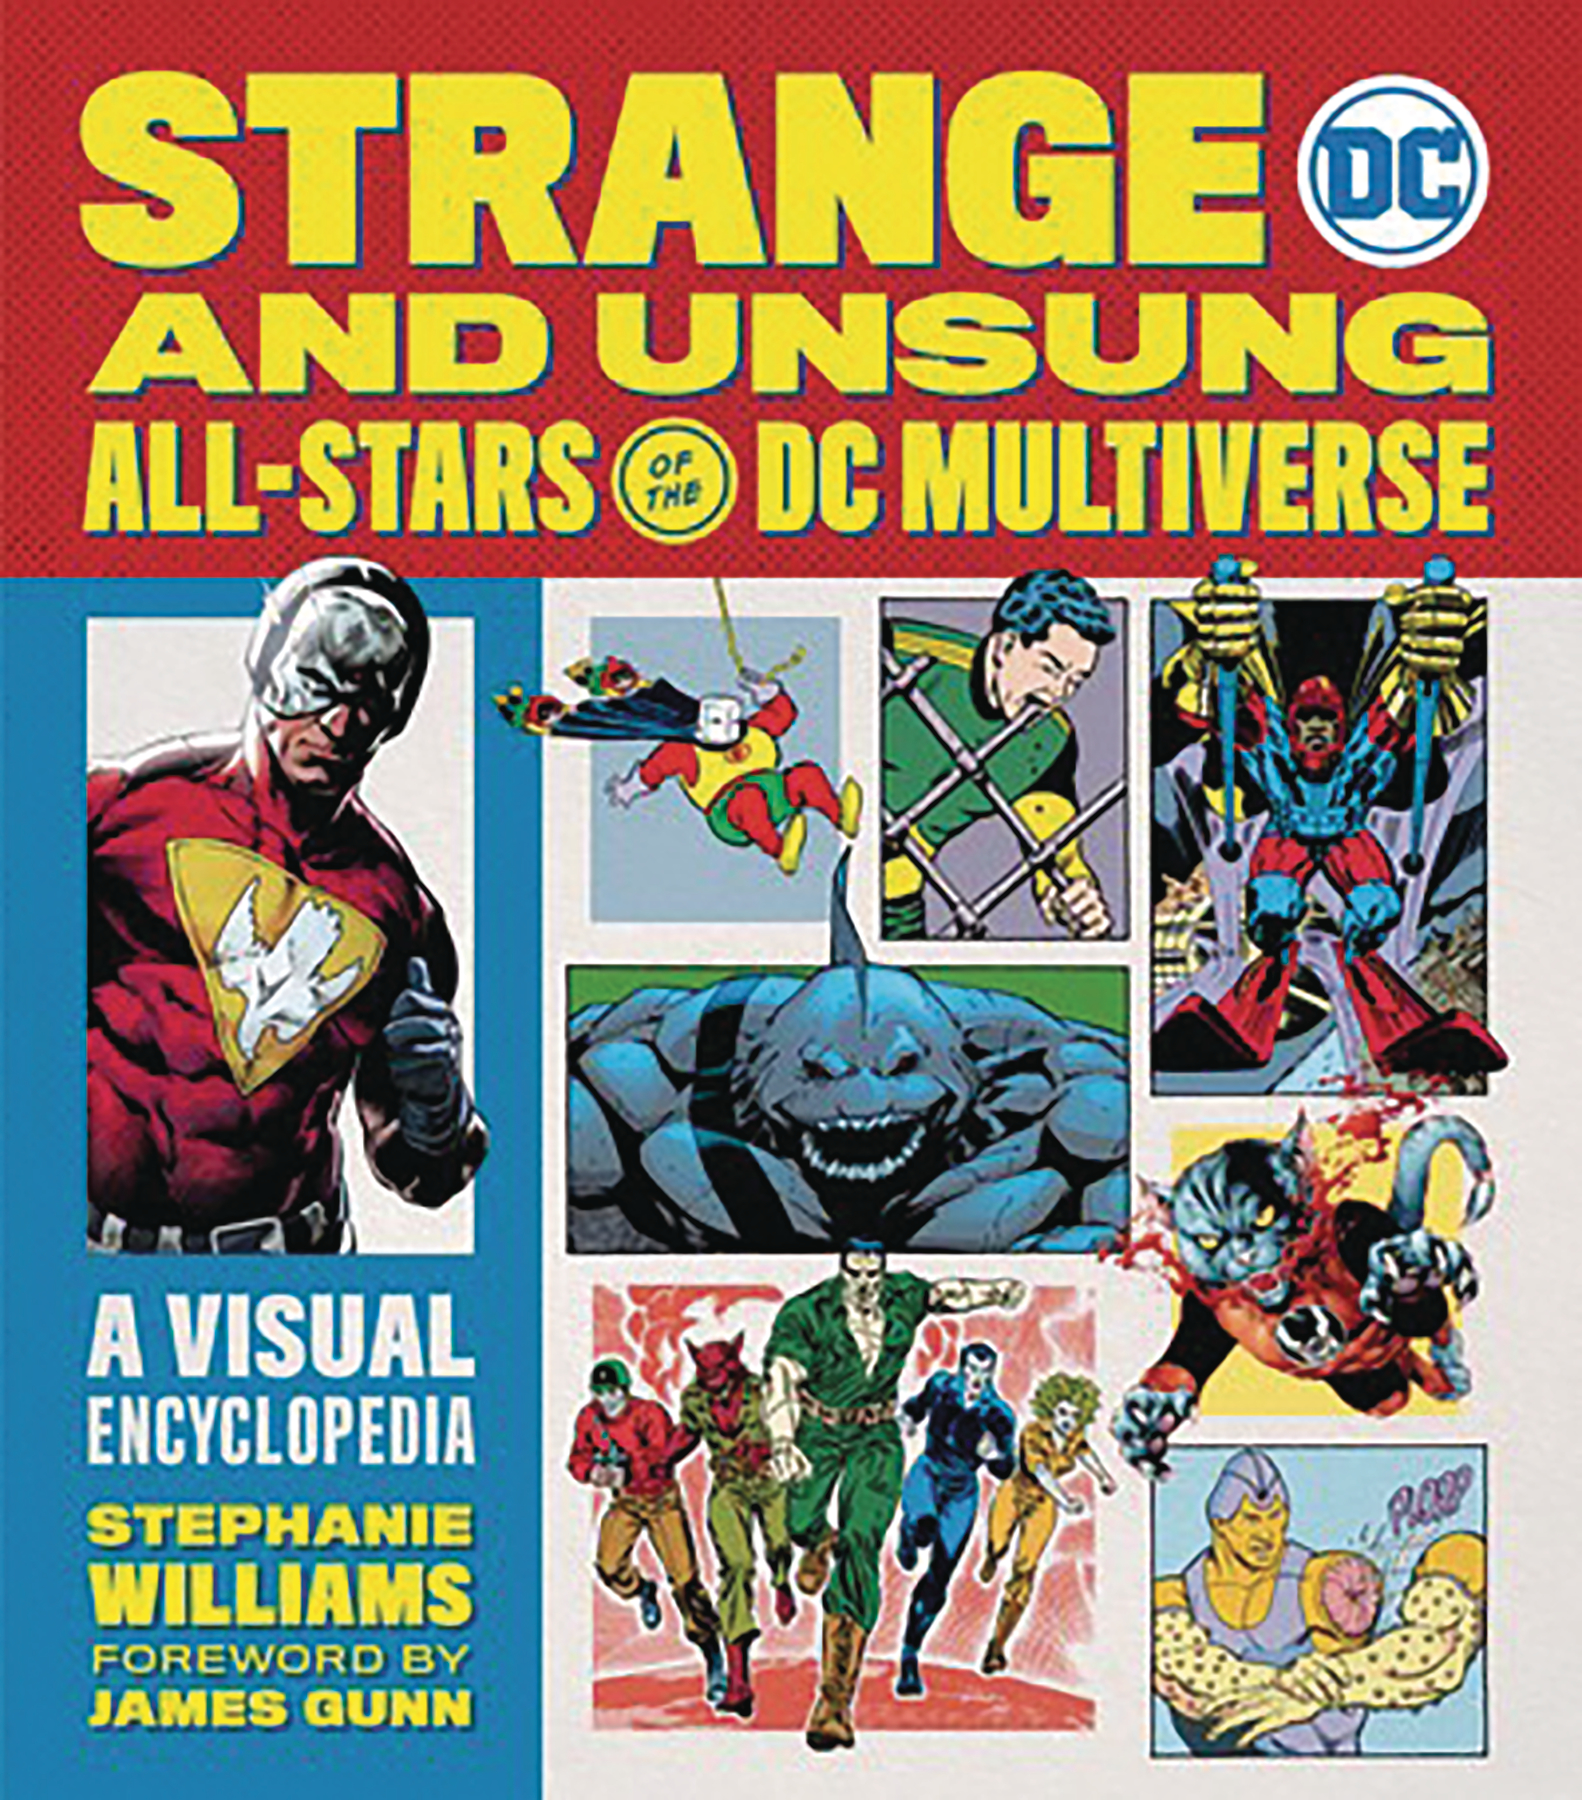 Strange & Unsung All Stars of DC Multiverse Visual Encyc